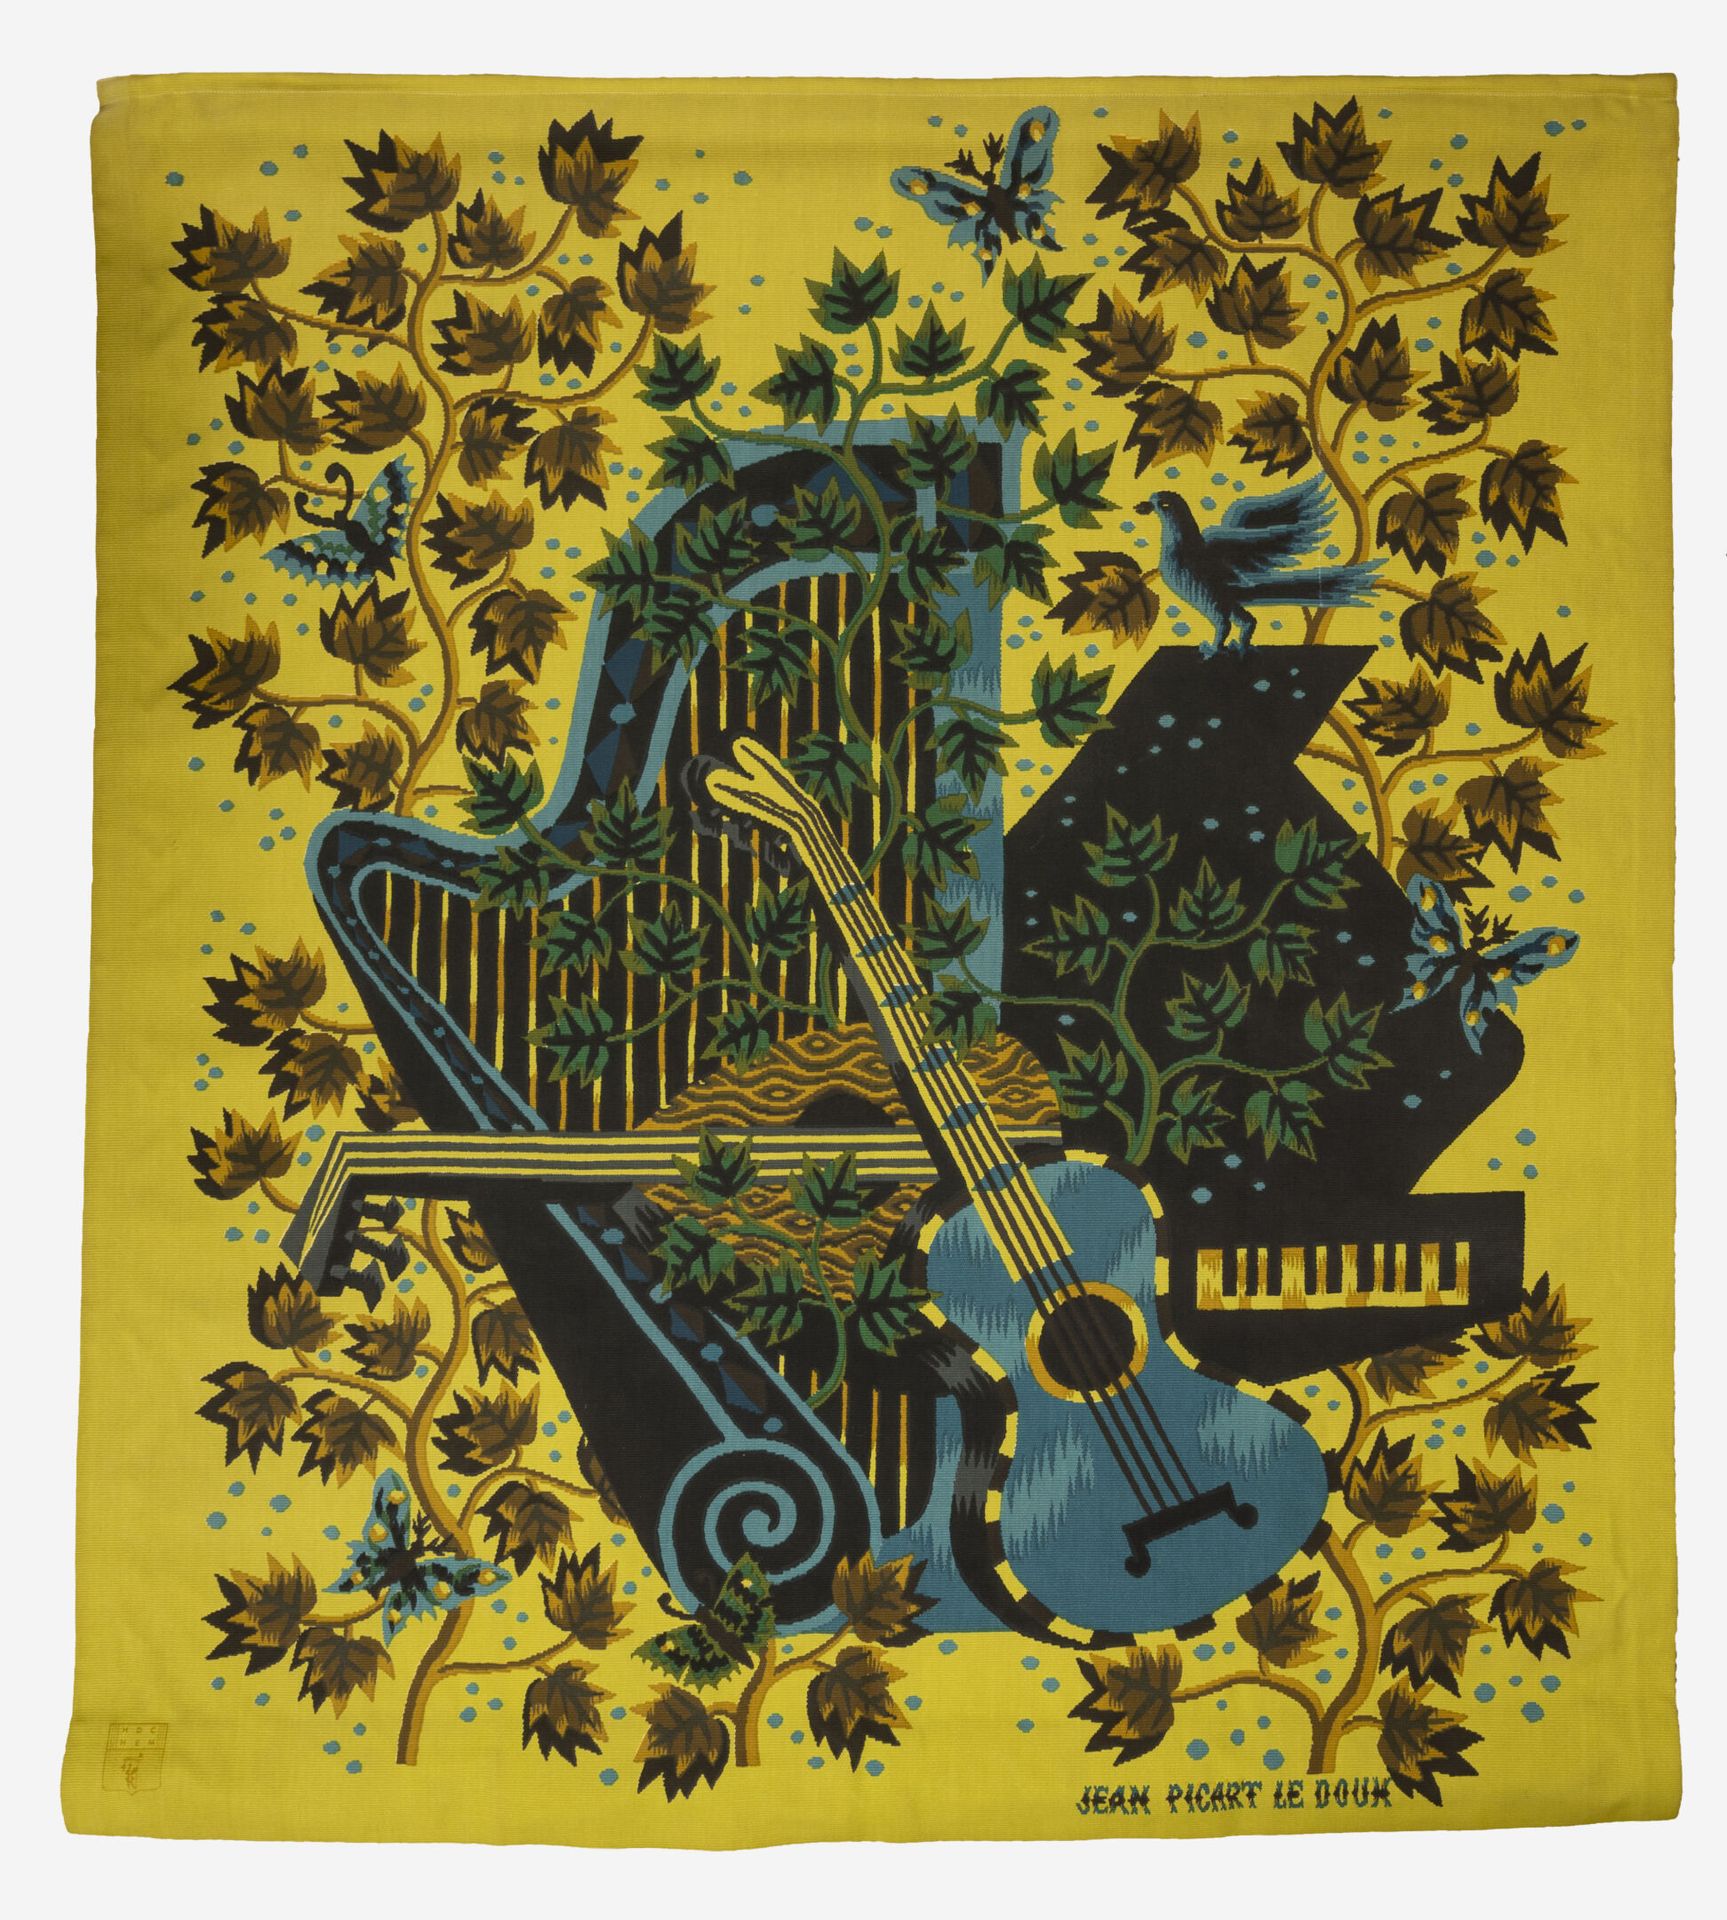 Jean PICART LE DOUX (1902-1982) 协奏曲。

壁挂。

丝网印刷在织物上。

挂毯的复制品。

编号为341/750，并在书脊上签&hellip;